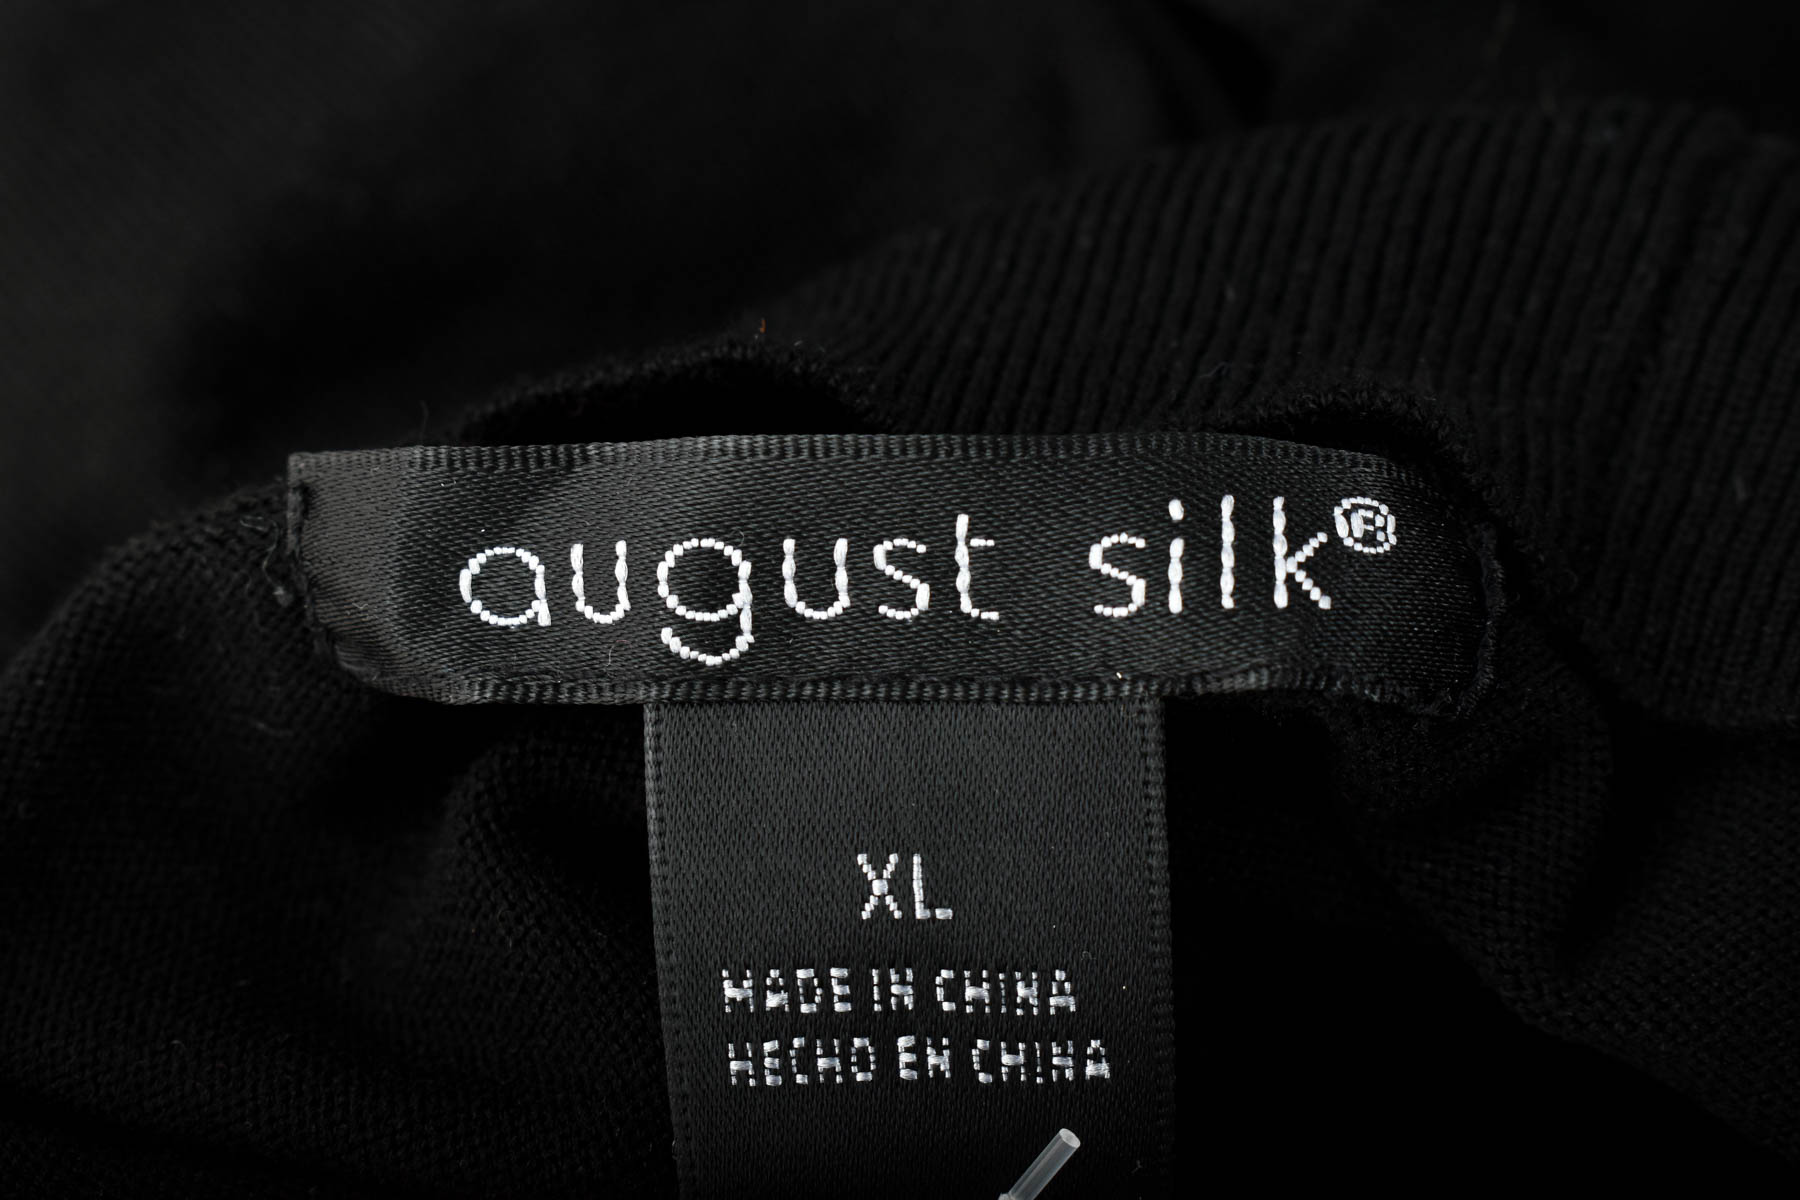 Women's sweater - August Silk - 2